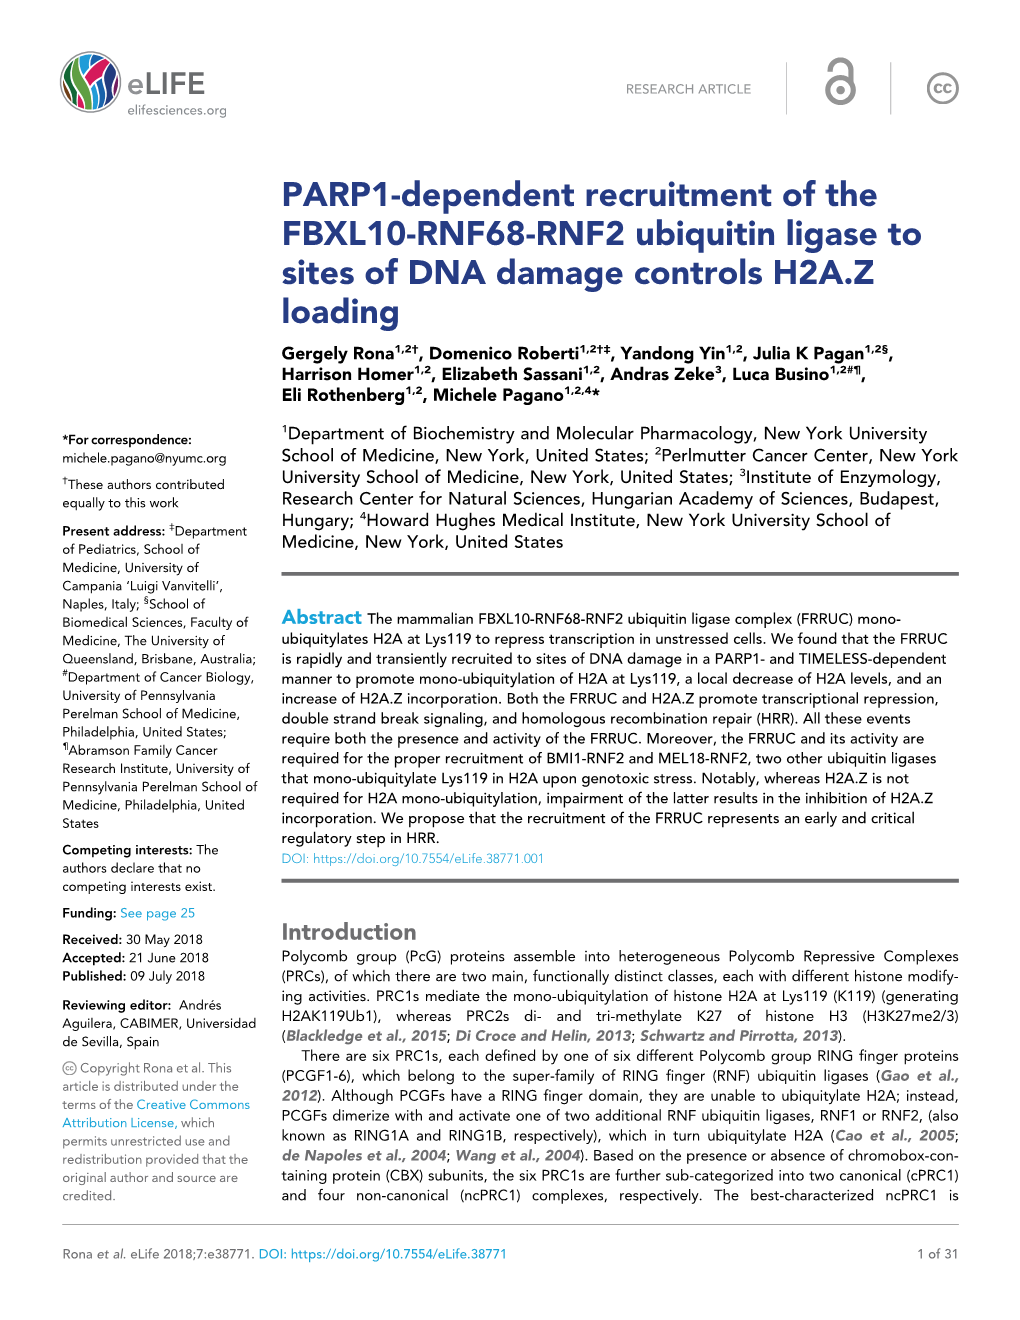 PARP1-Dependent Recruitment of the FBXL10-RNF68-RNF2